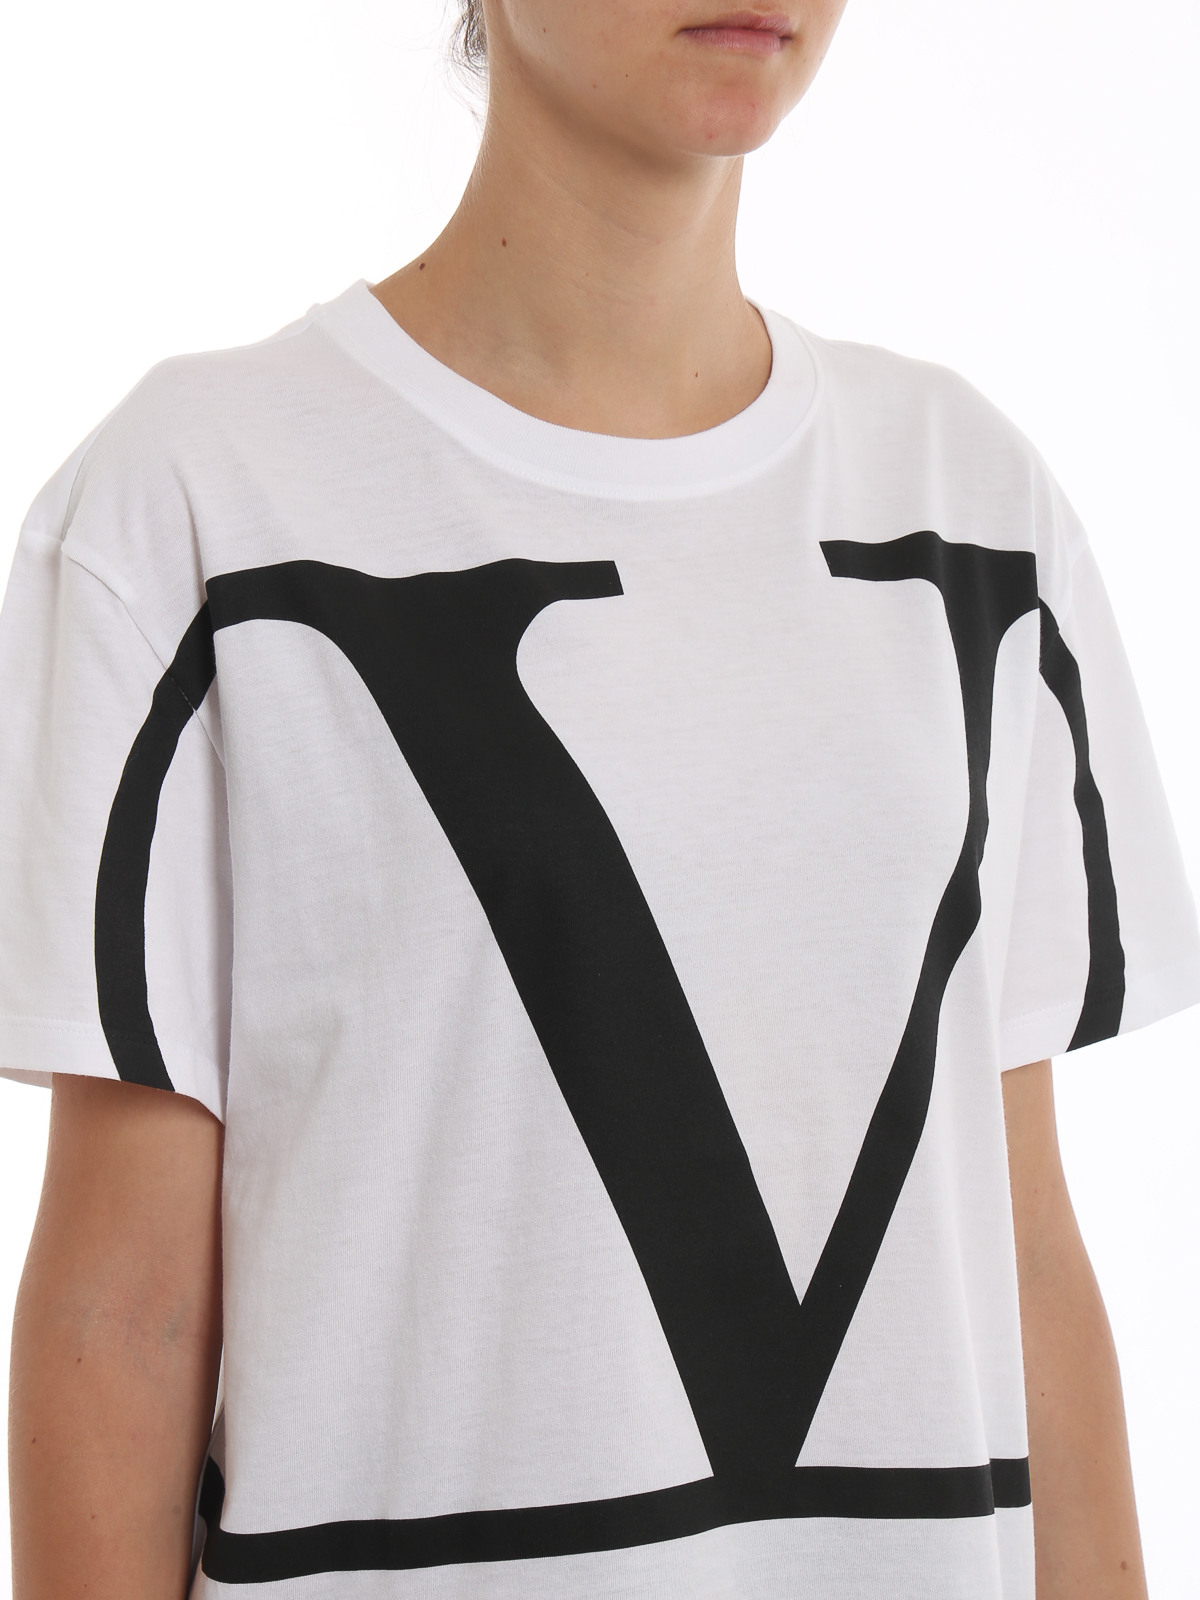 Sprængstoffer kredsløb skole T-shirts Valentino - Vlogo over T-shirt - SB3MG01Z4Q6A01